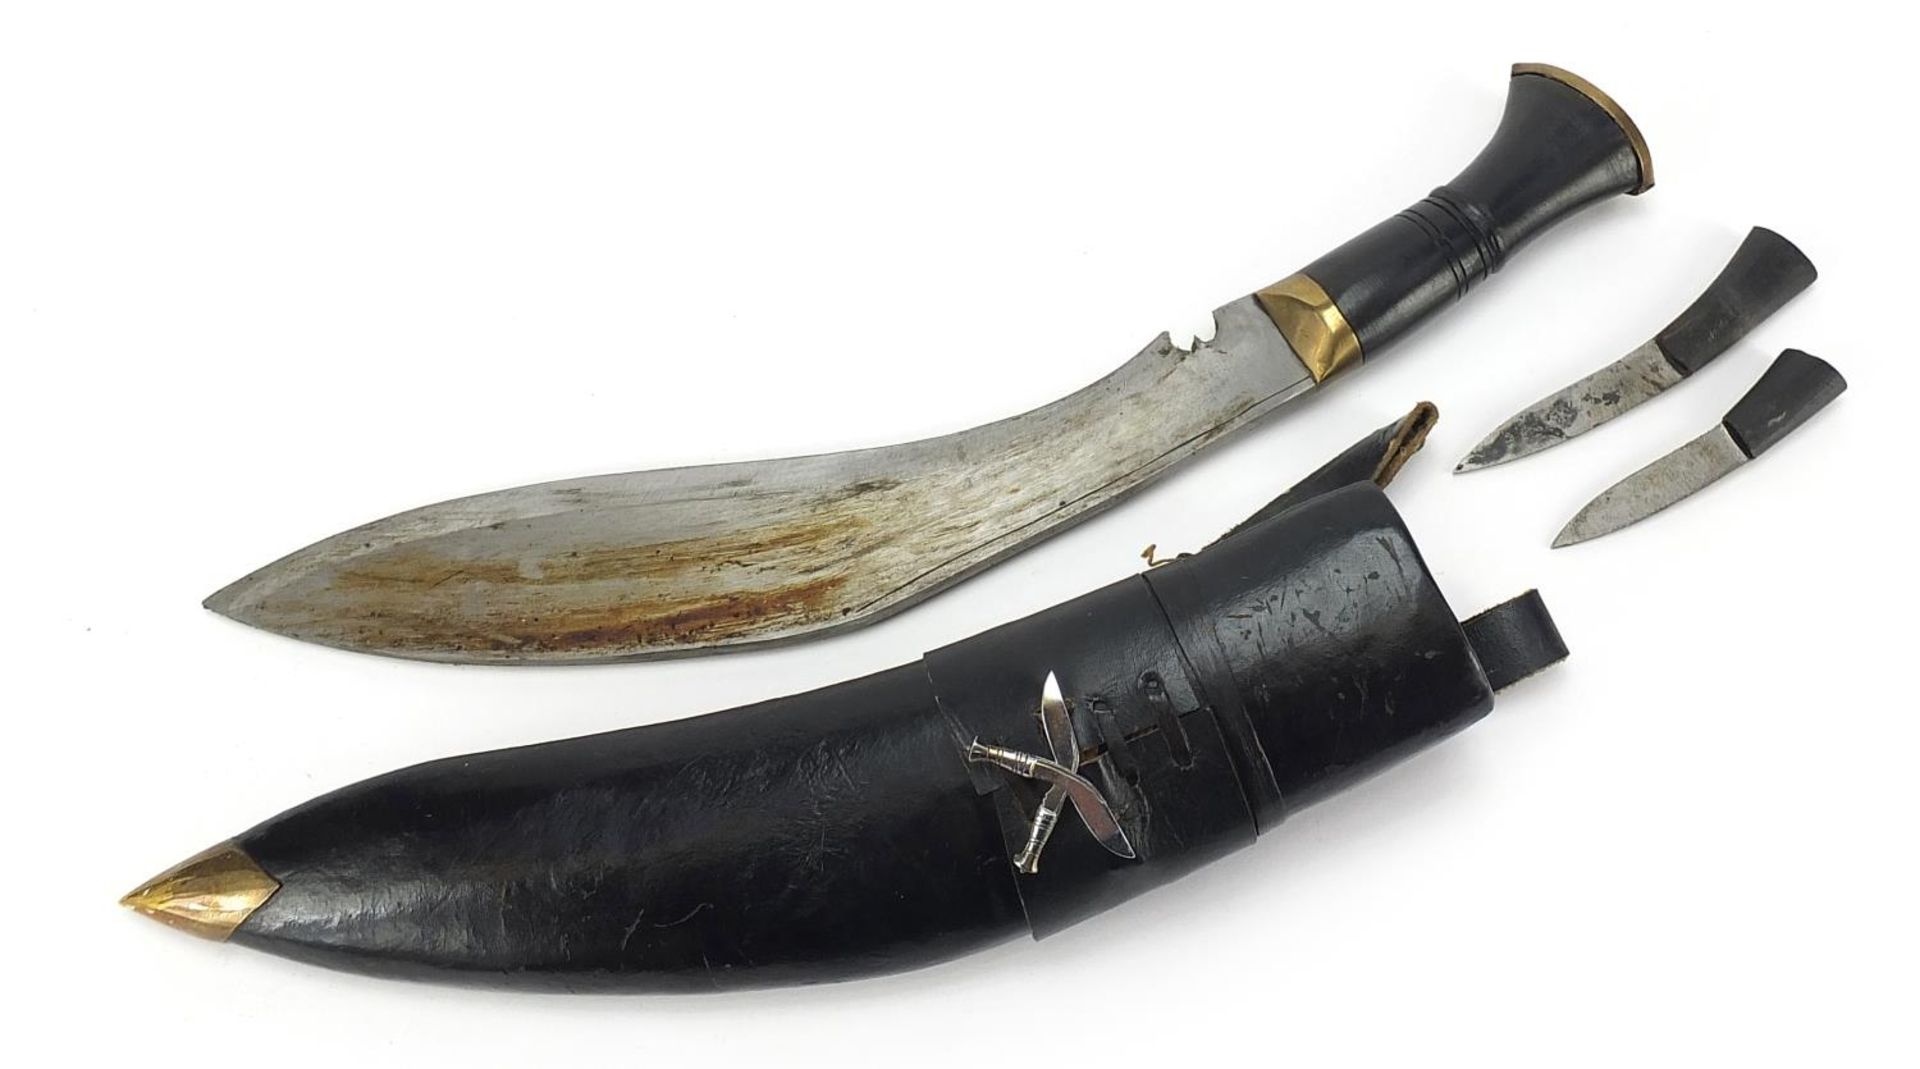 Gurkhas kukri knife with leather sheath, 42cm in length